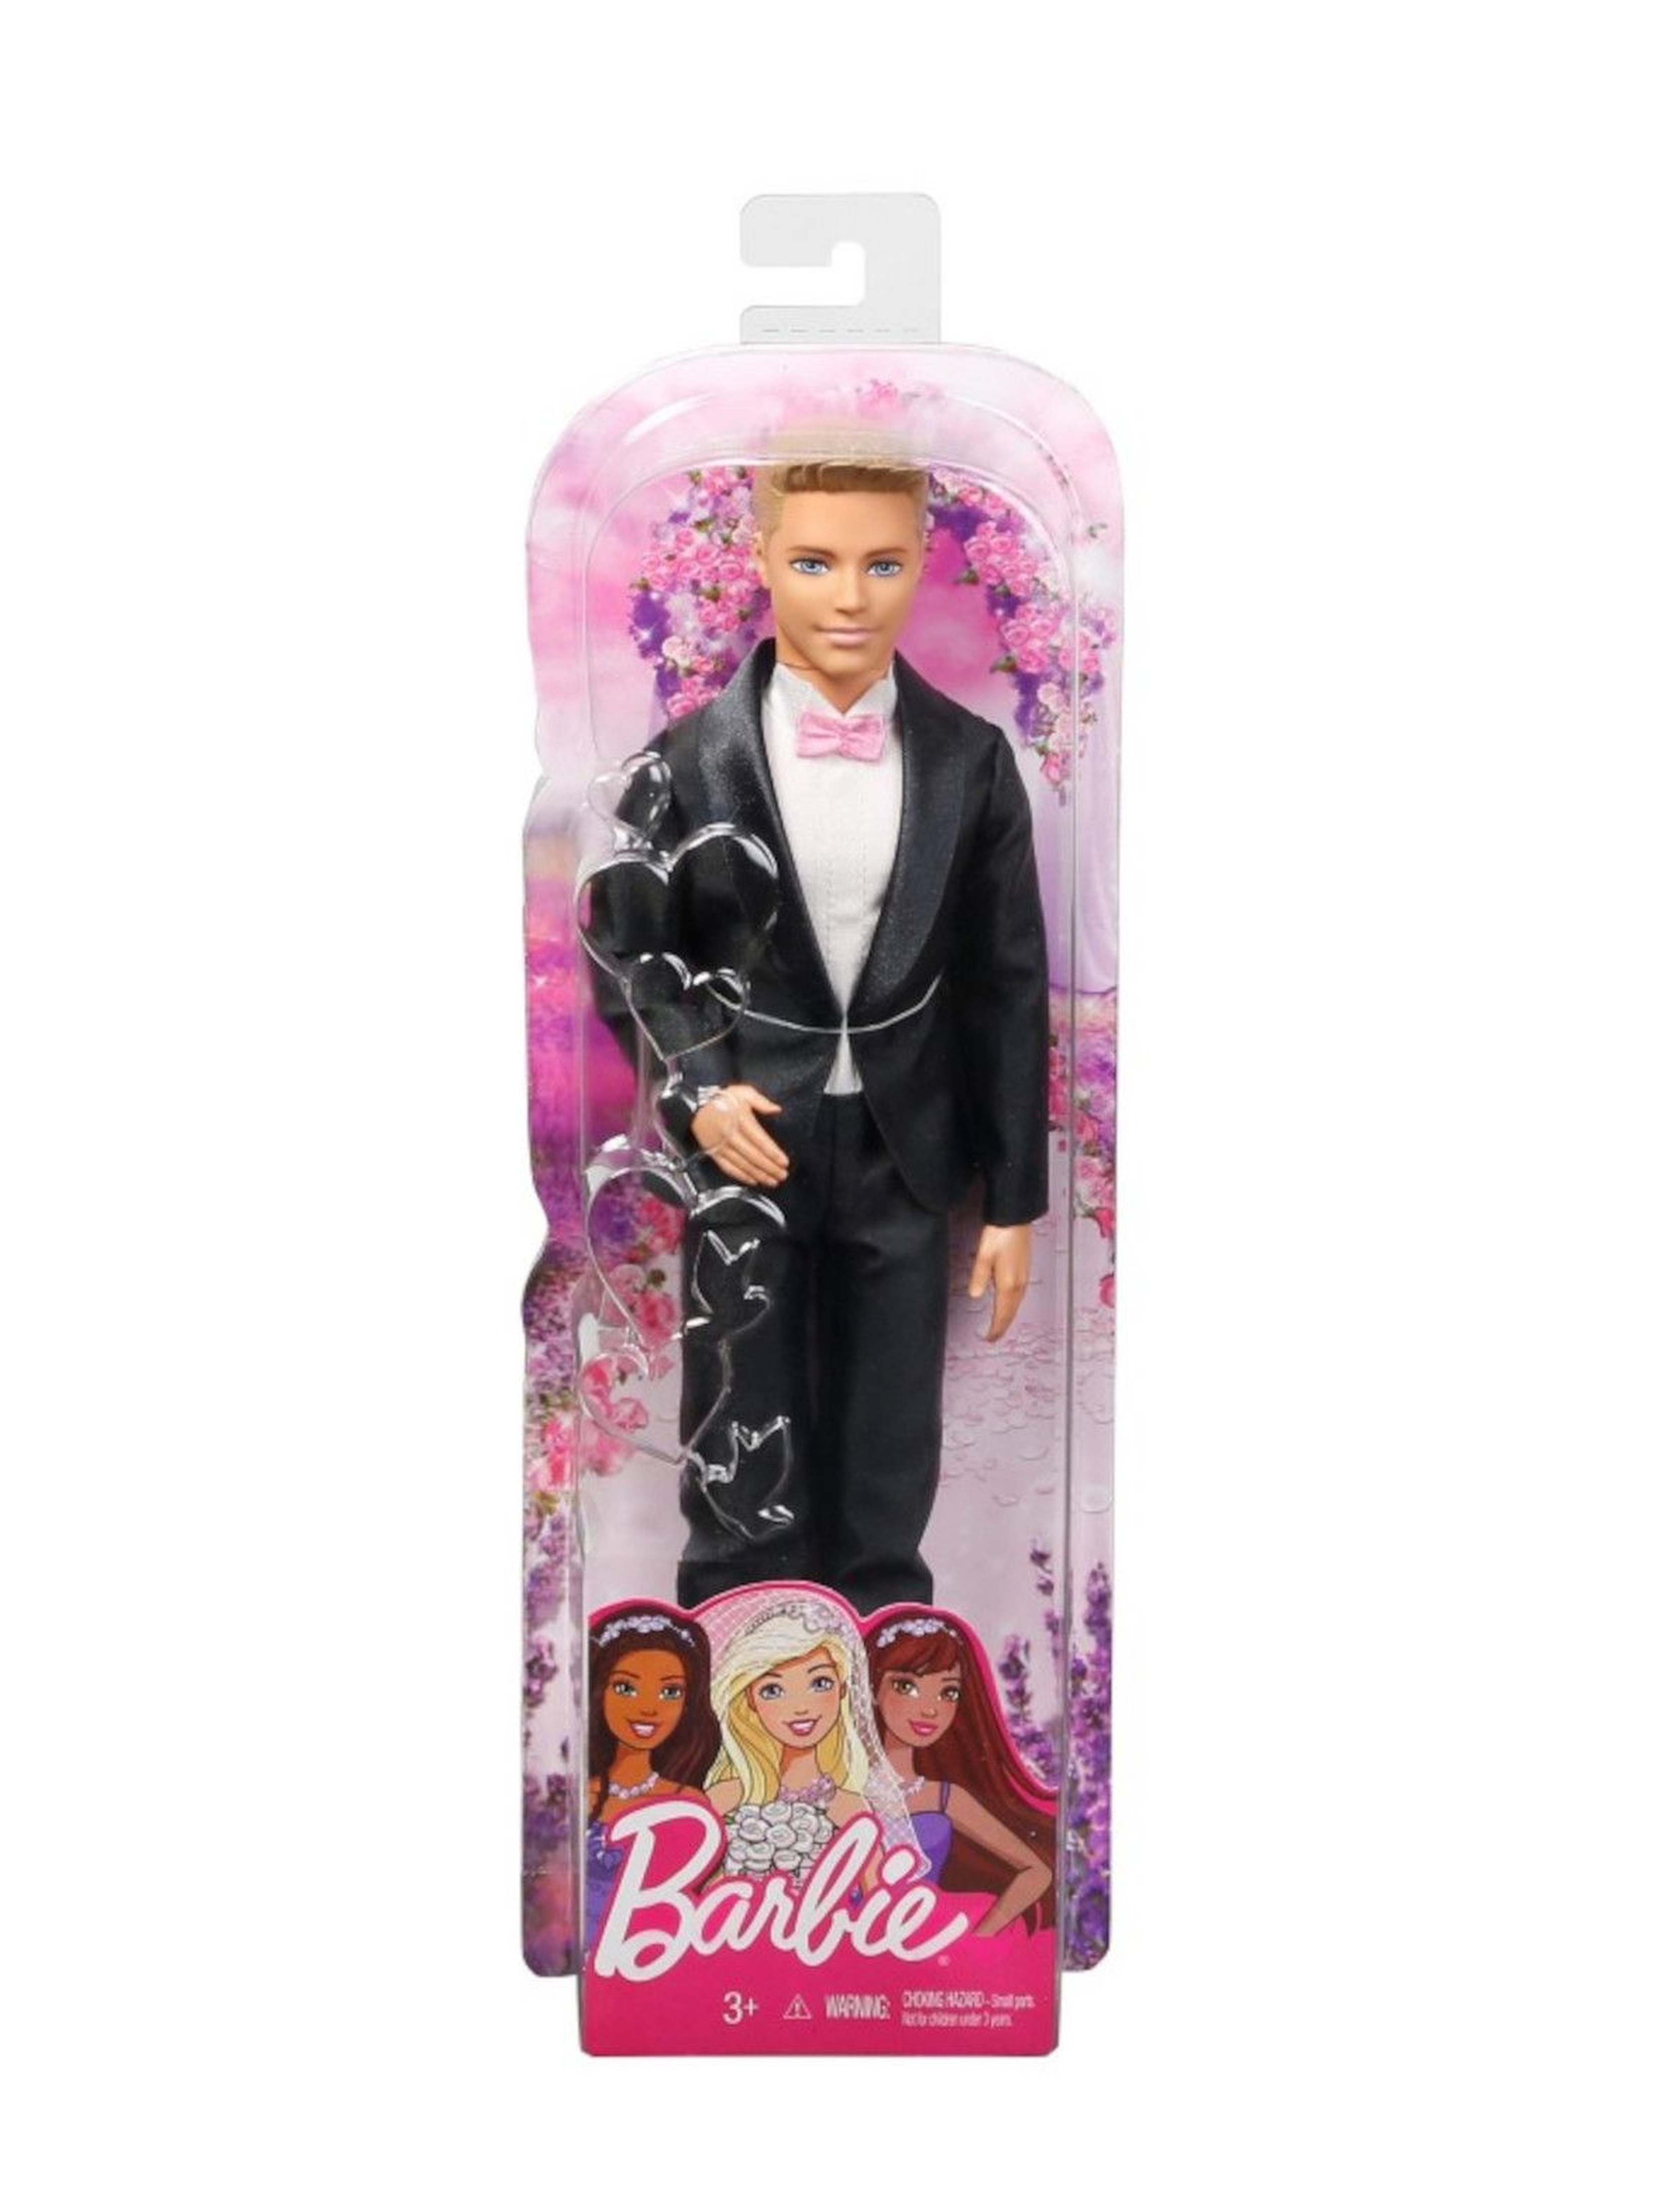 Barbie - Lalka Pan Młody wiem 3+